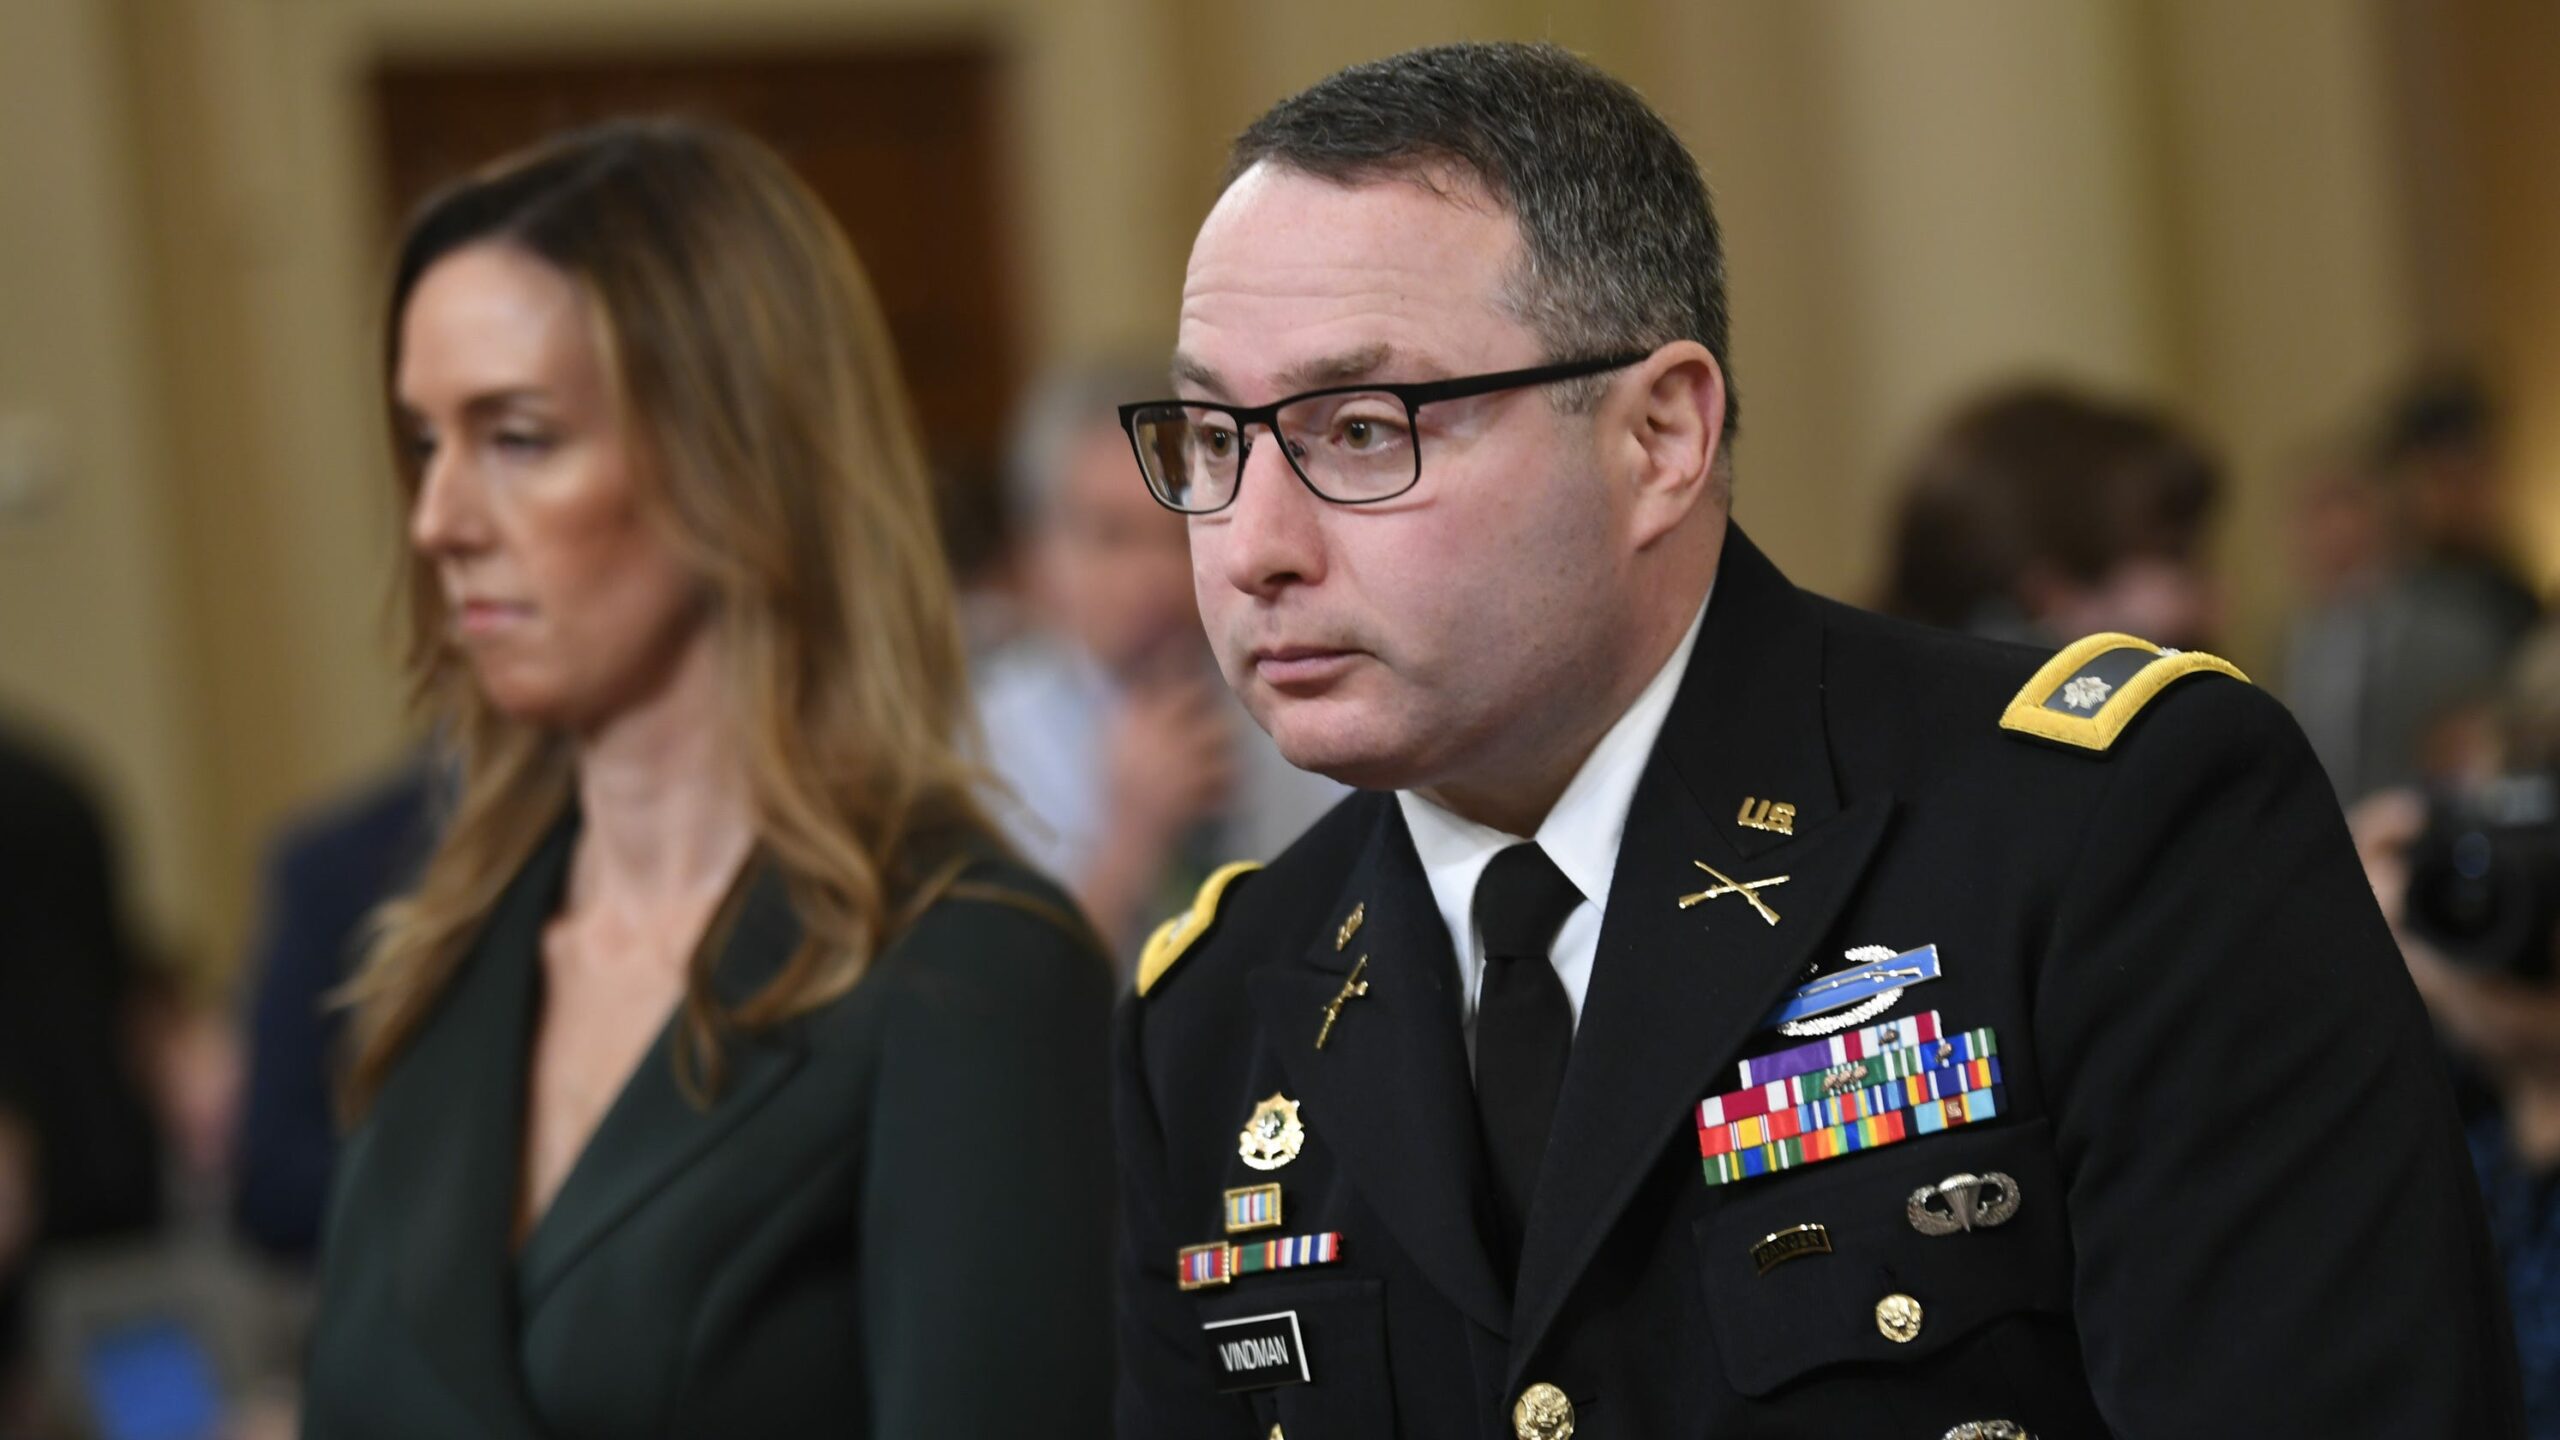 Lt. Col. Alex Vindman retires, cites bullying over Trump impeachment